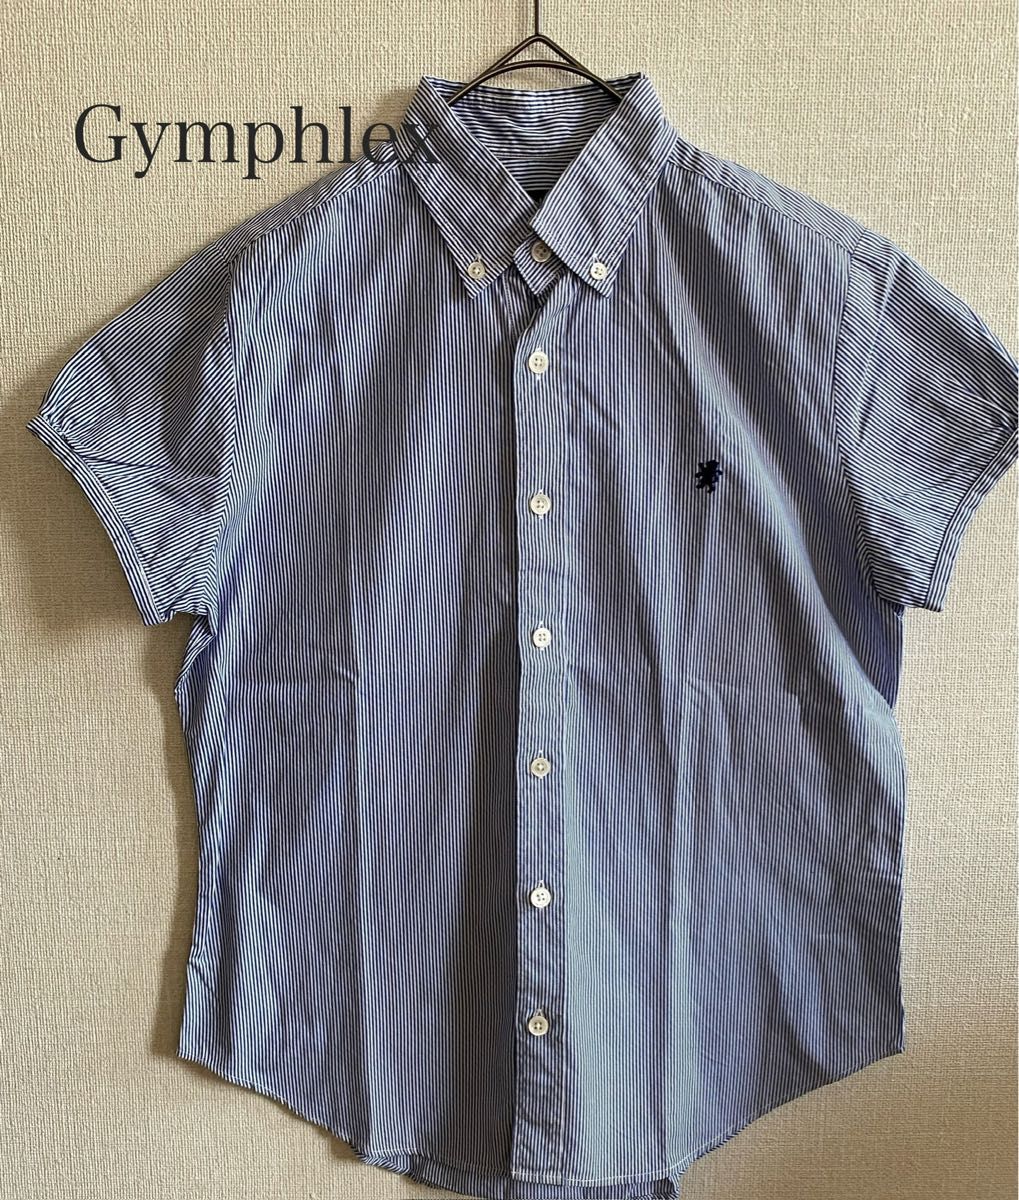 Gymphlex ジムフレックス 日本製 コットン100%パフスリーブシャツ 半袖 ストライプ サイズ12